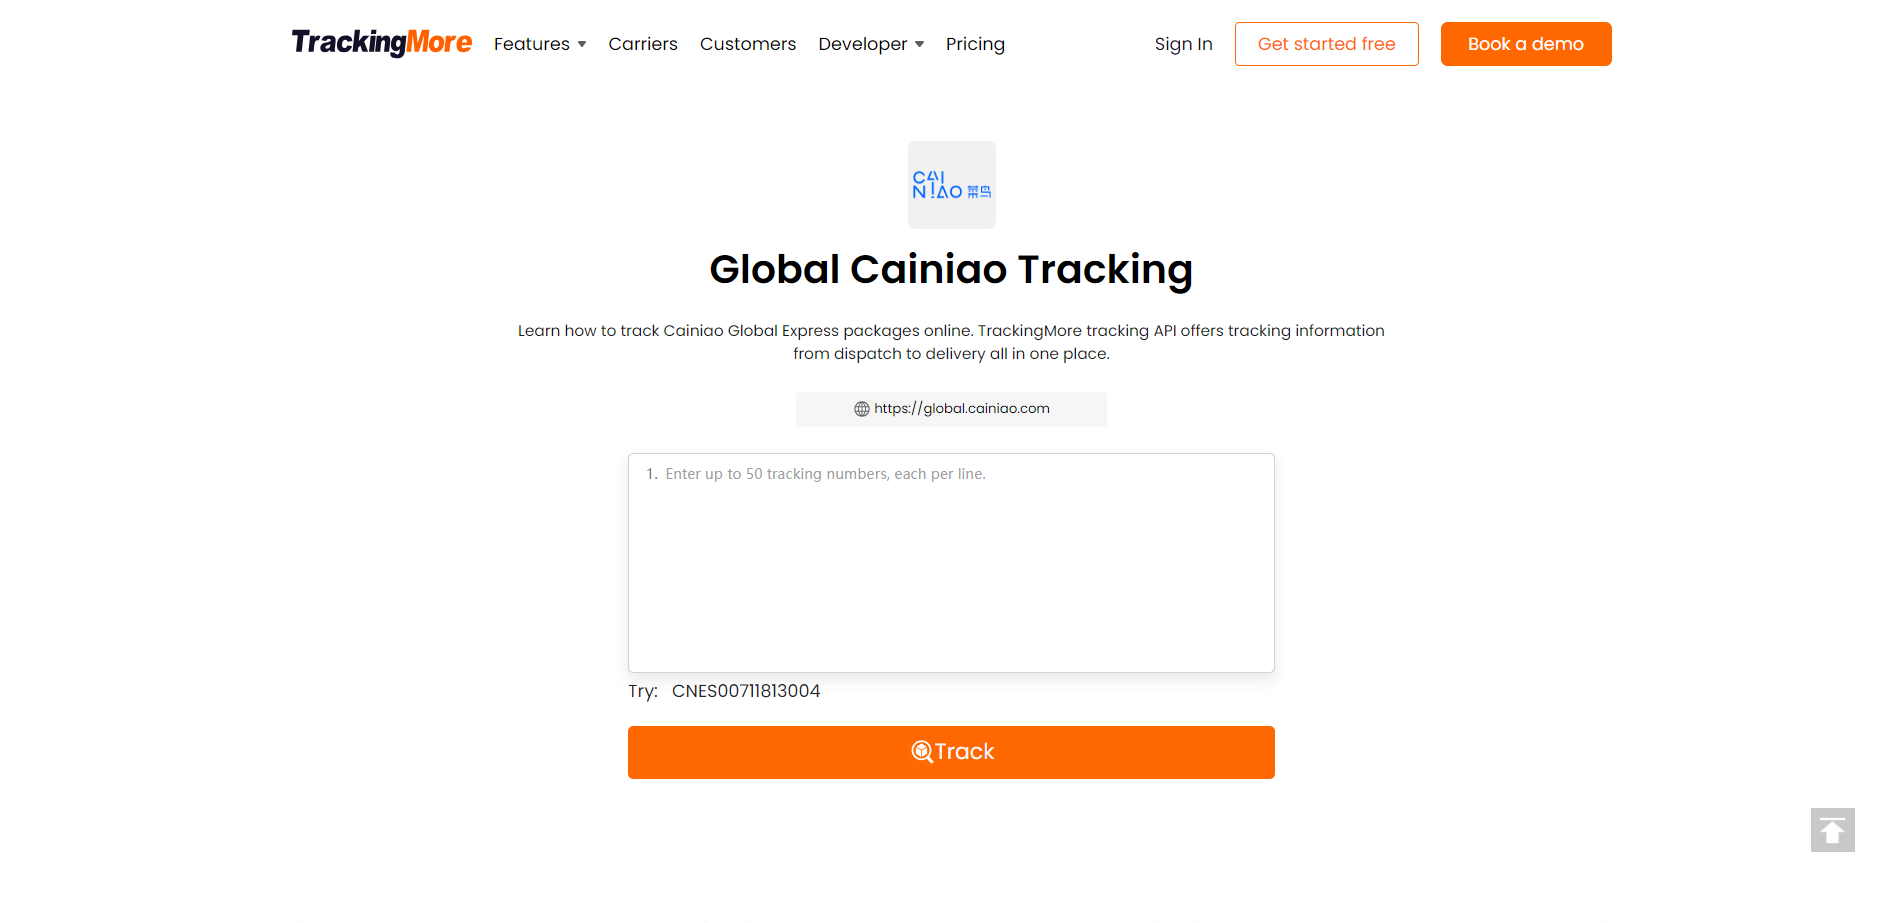 TrackingMore Cainiao global tracking page